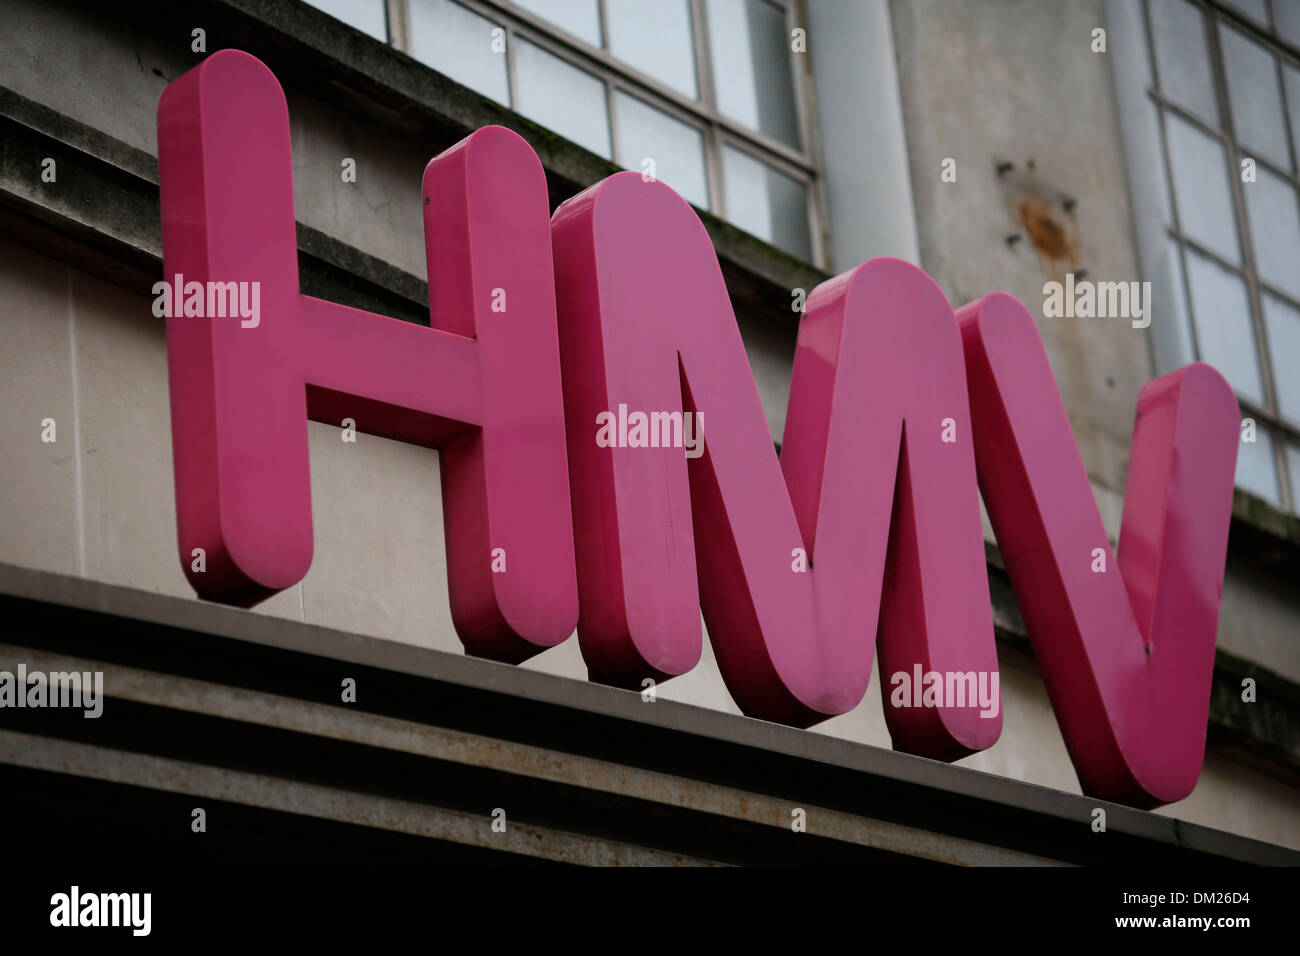 HMV store in central London 15 January, 2013. Stock Photo